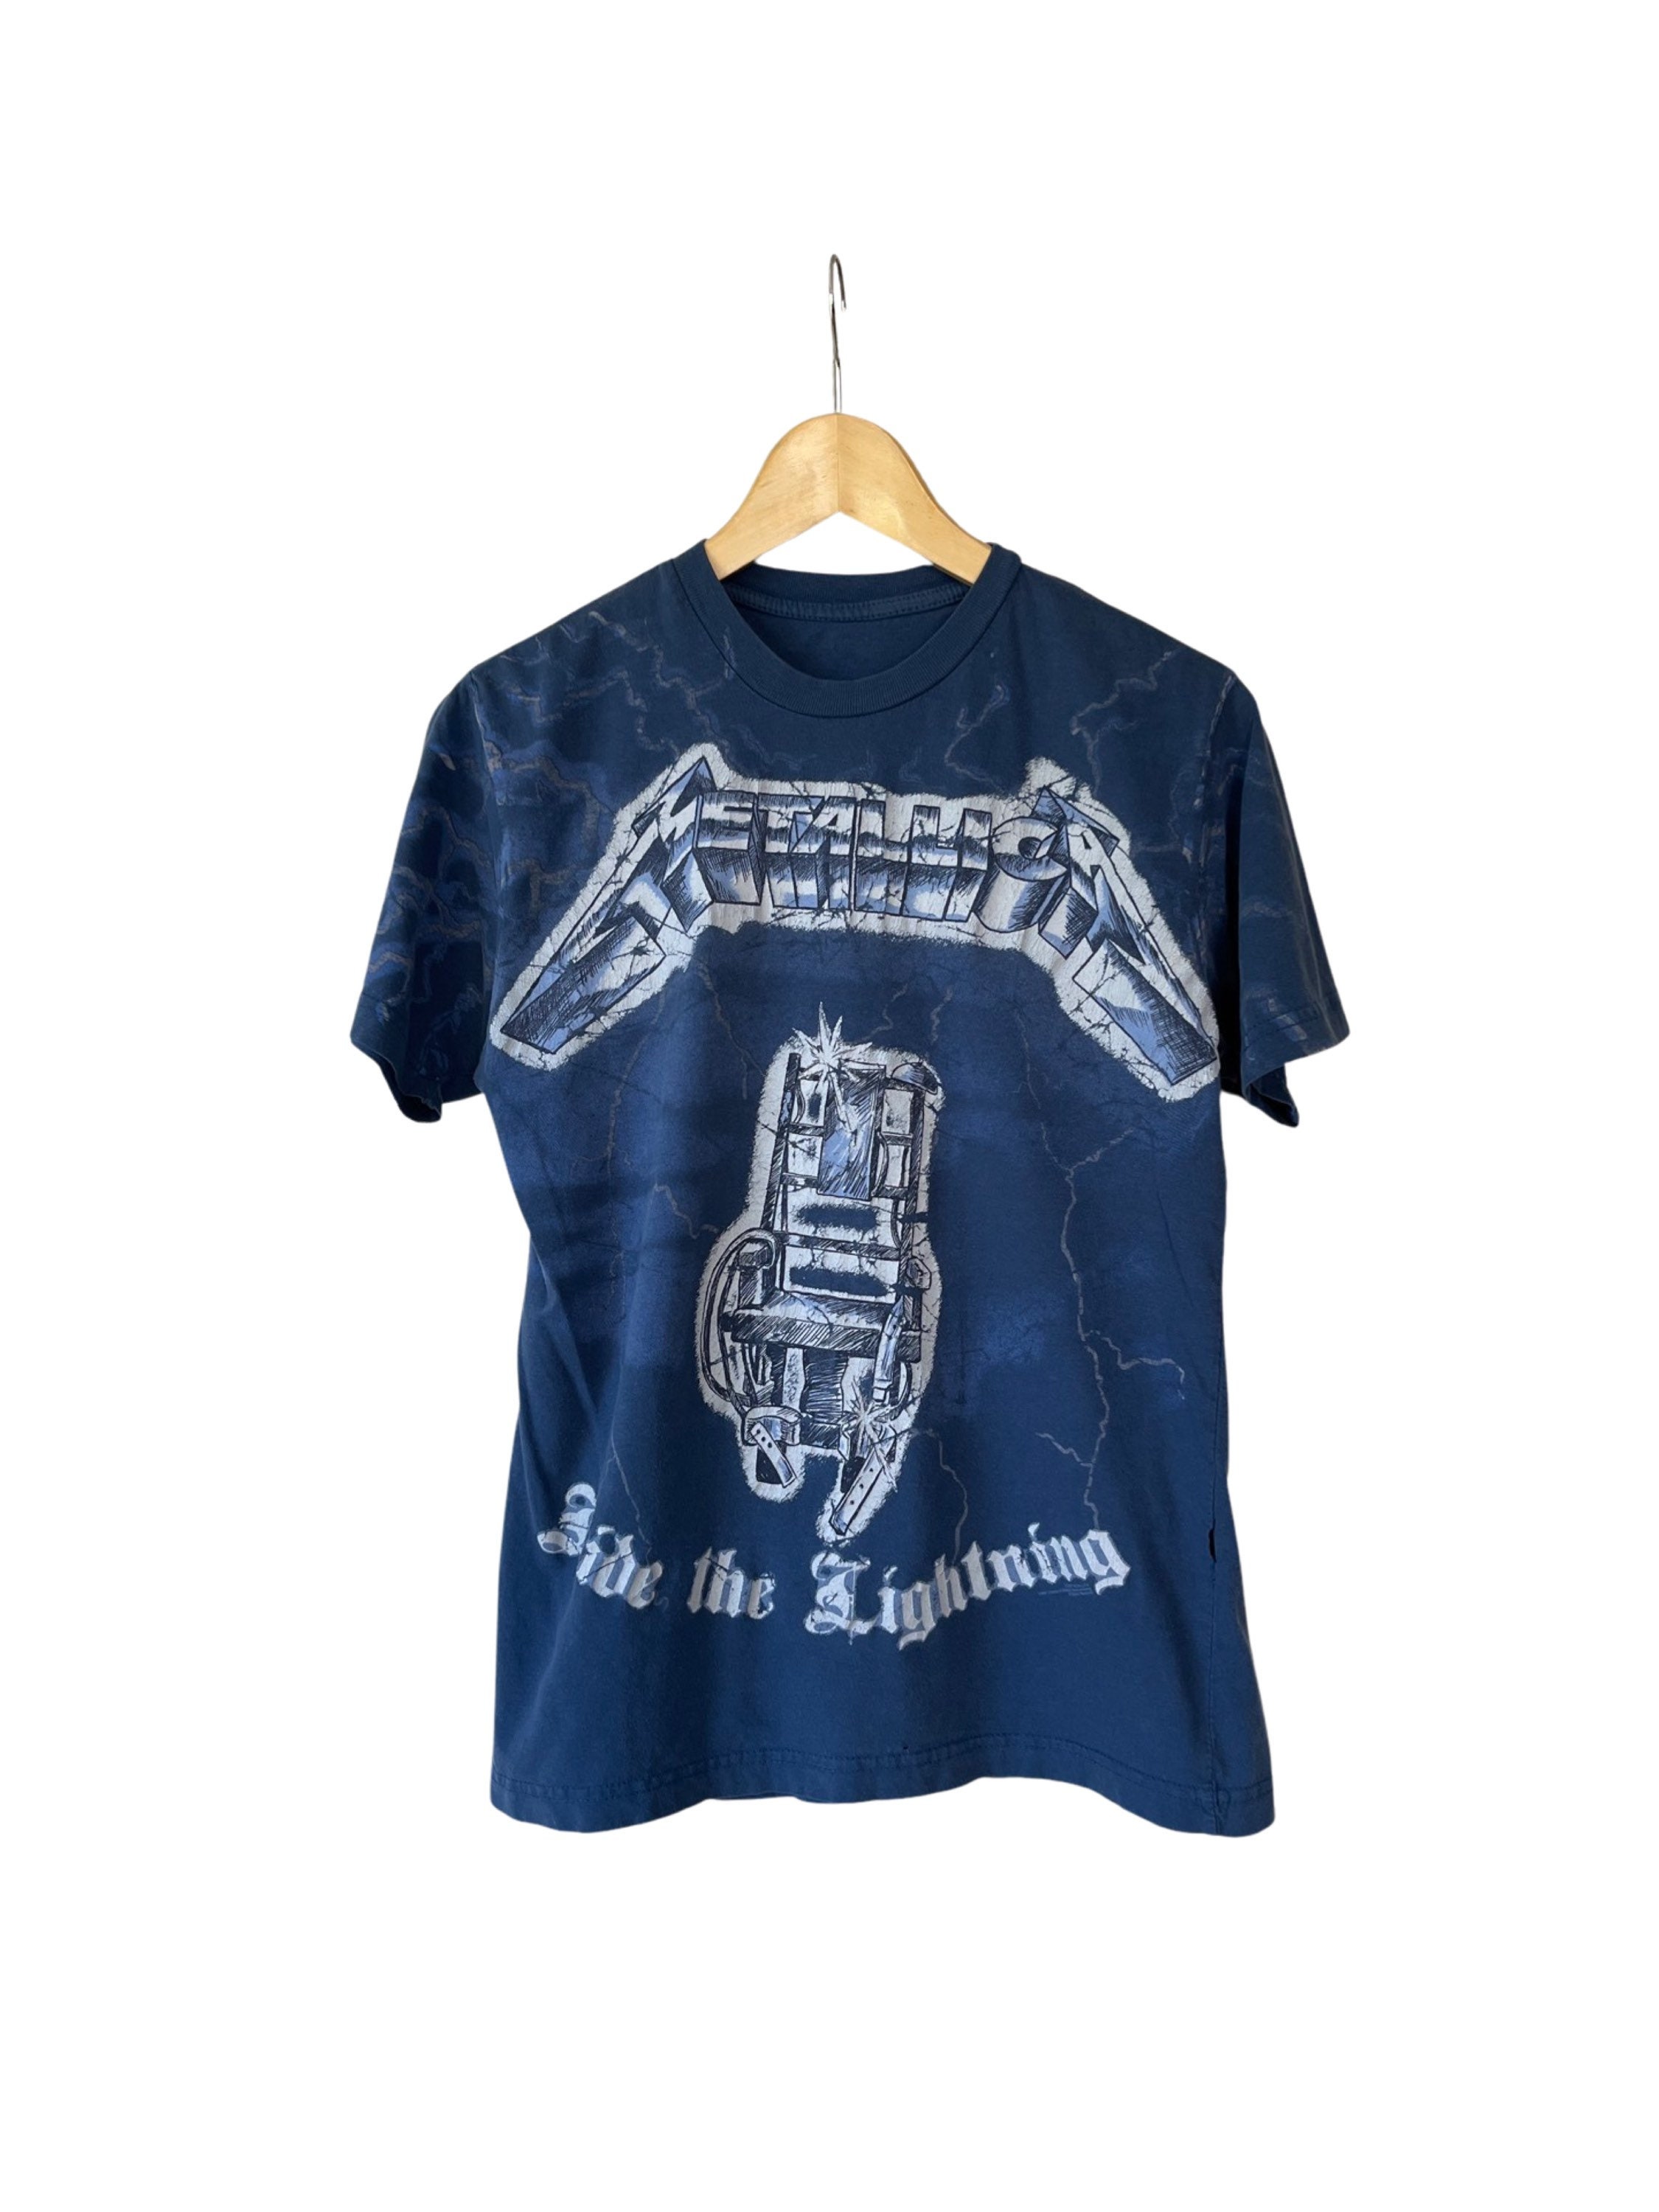 Metallica Ride the Lightning Jumbo Print T-shirt Official Adult Mens Black  New S